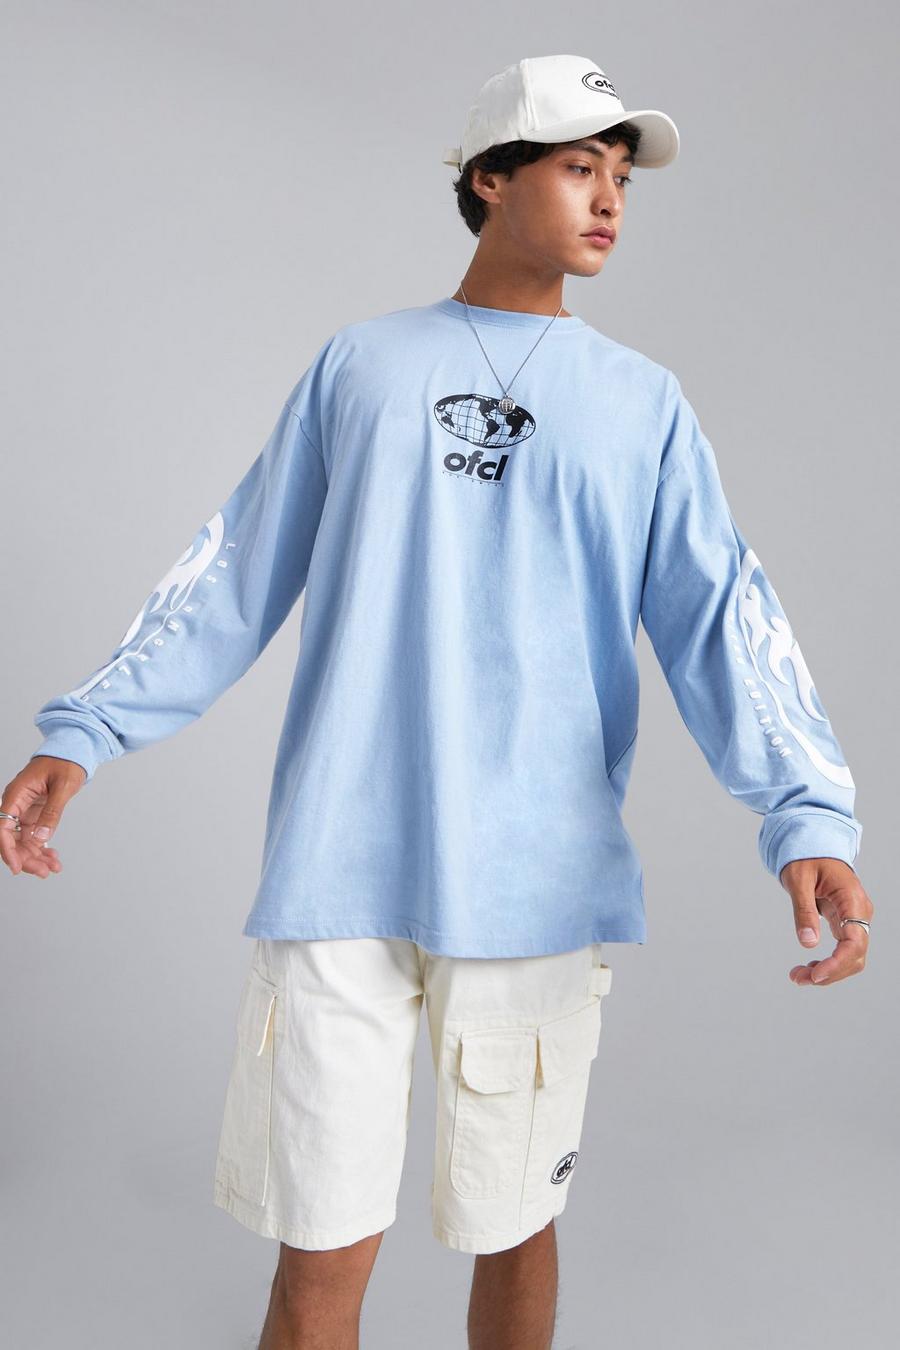 Camiseta oversize de manga larga con estampado gráfico Ofcl, Light blue azul